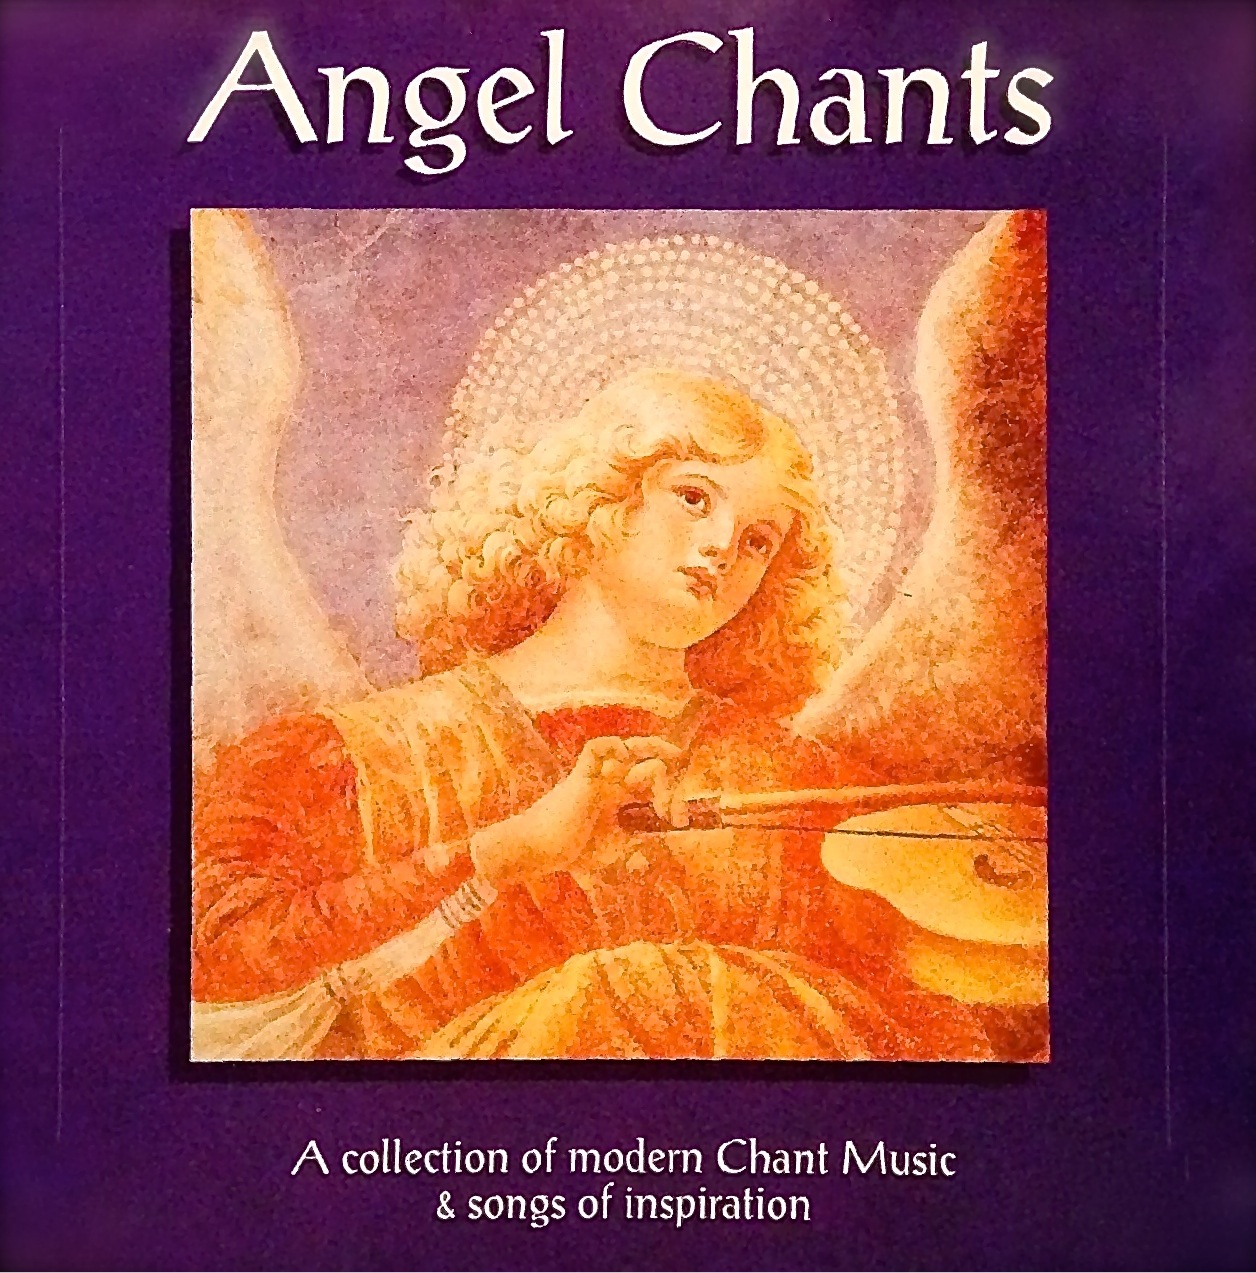 Angel Chants Digital Download